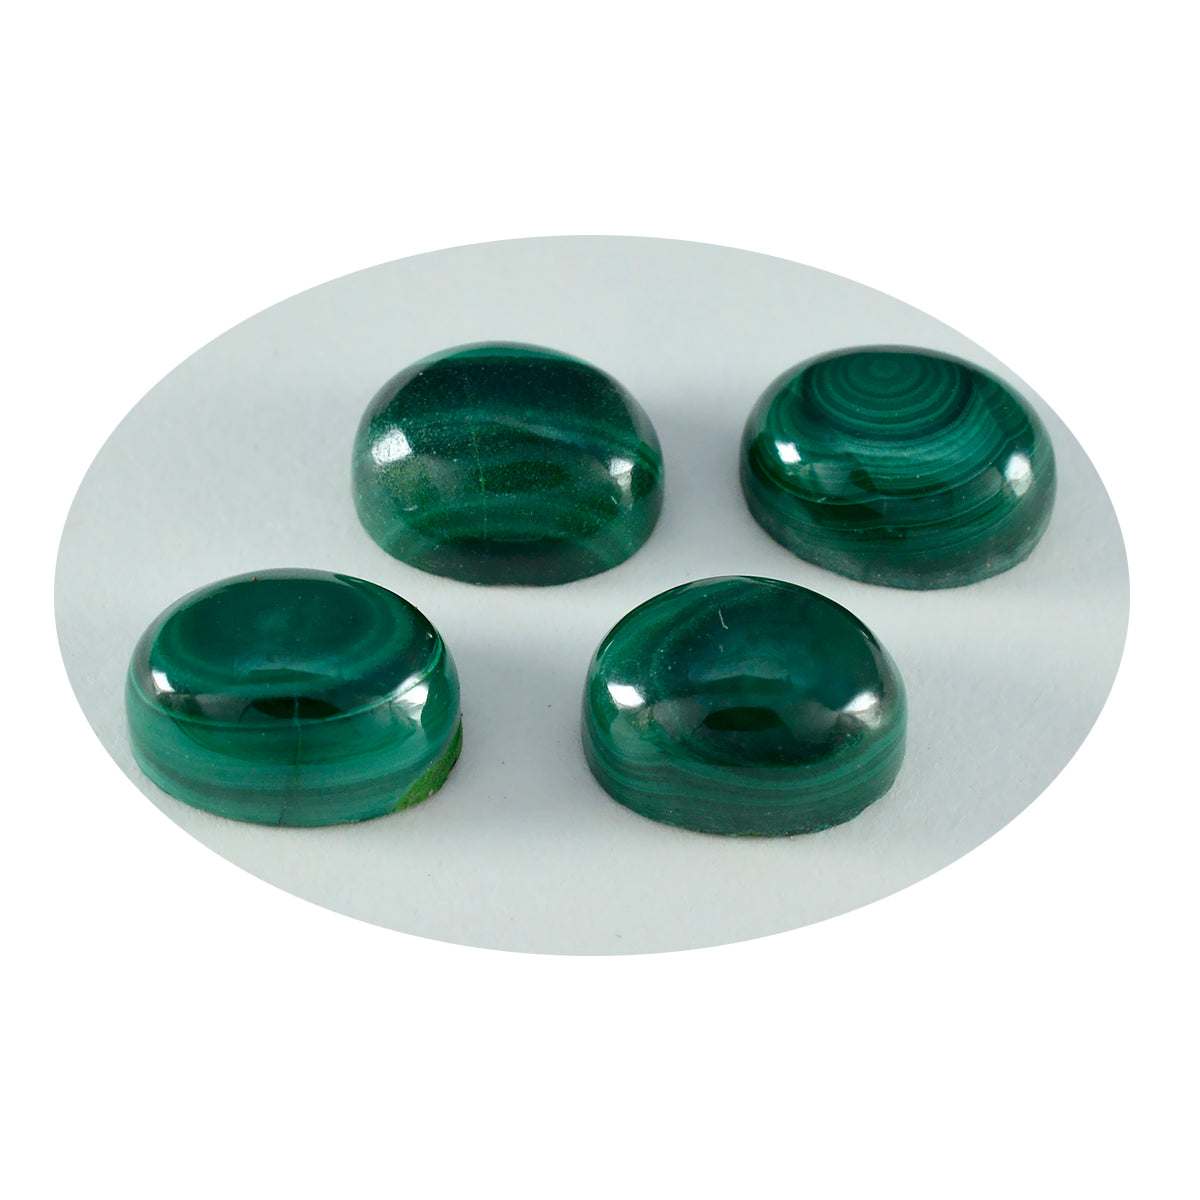 Riyogems 1PC Green Malachite Cabochon 6x8 mm Oval Shape awesome Quality Stone